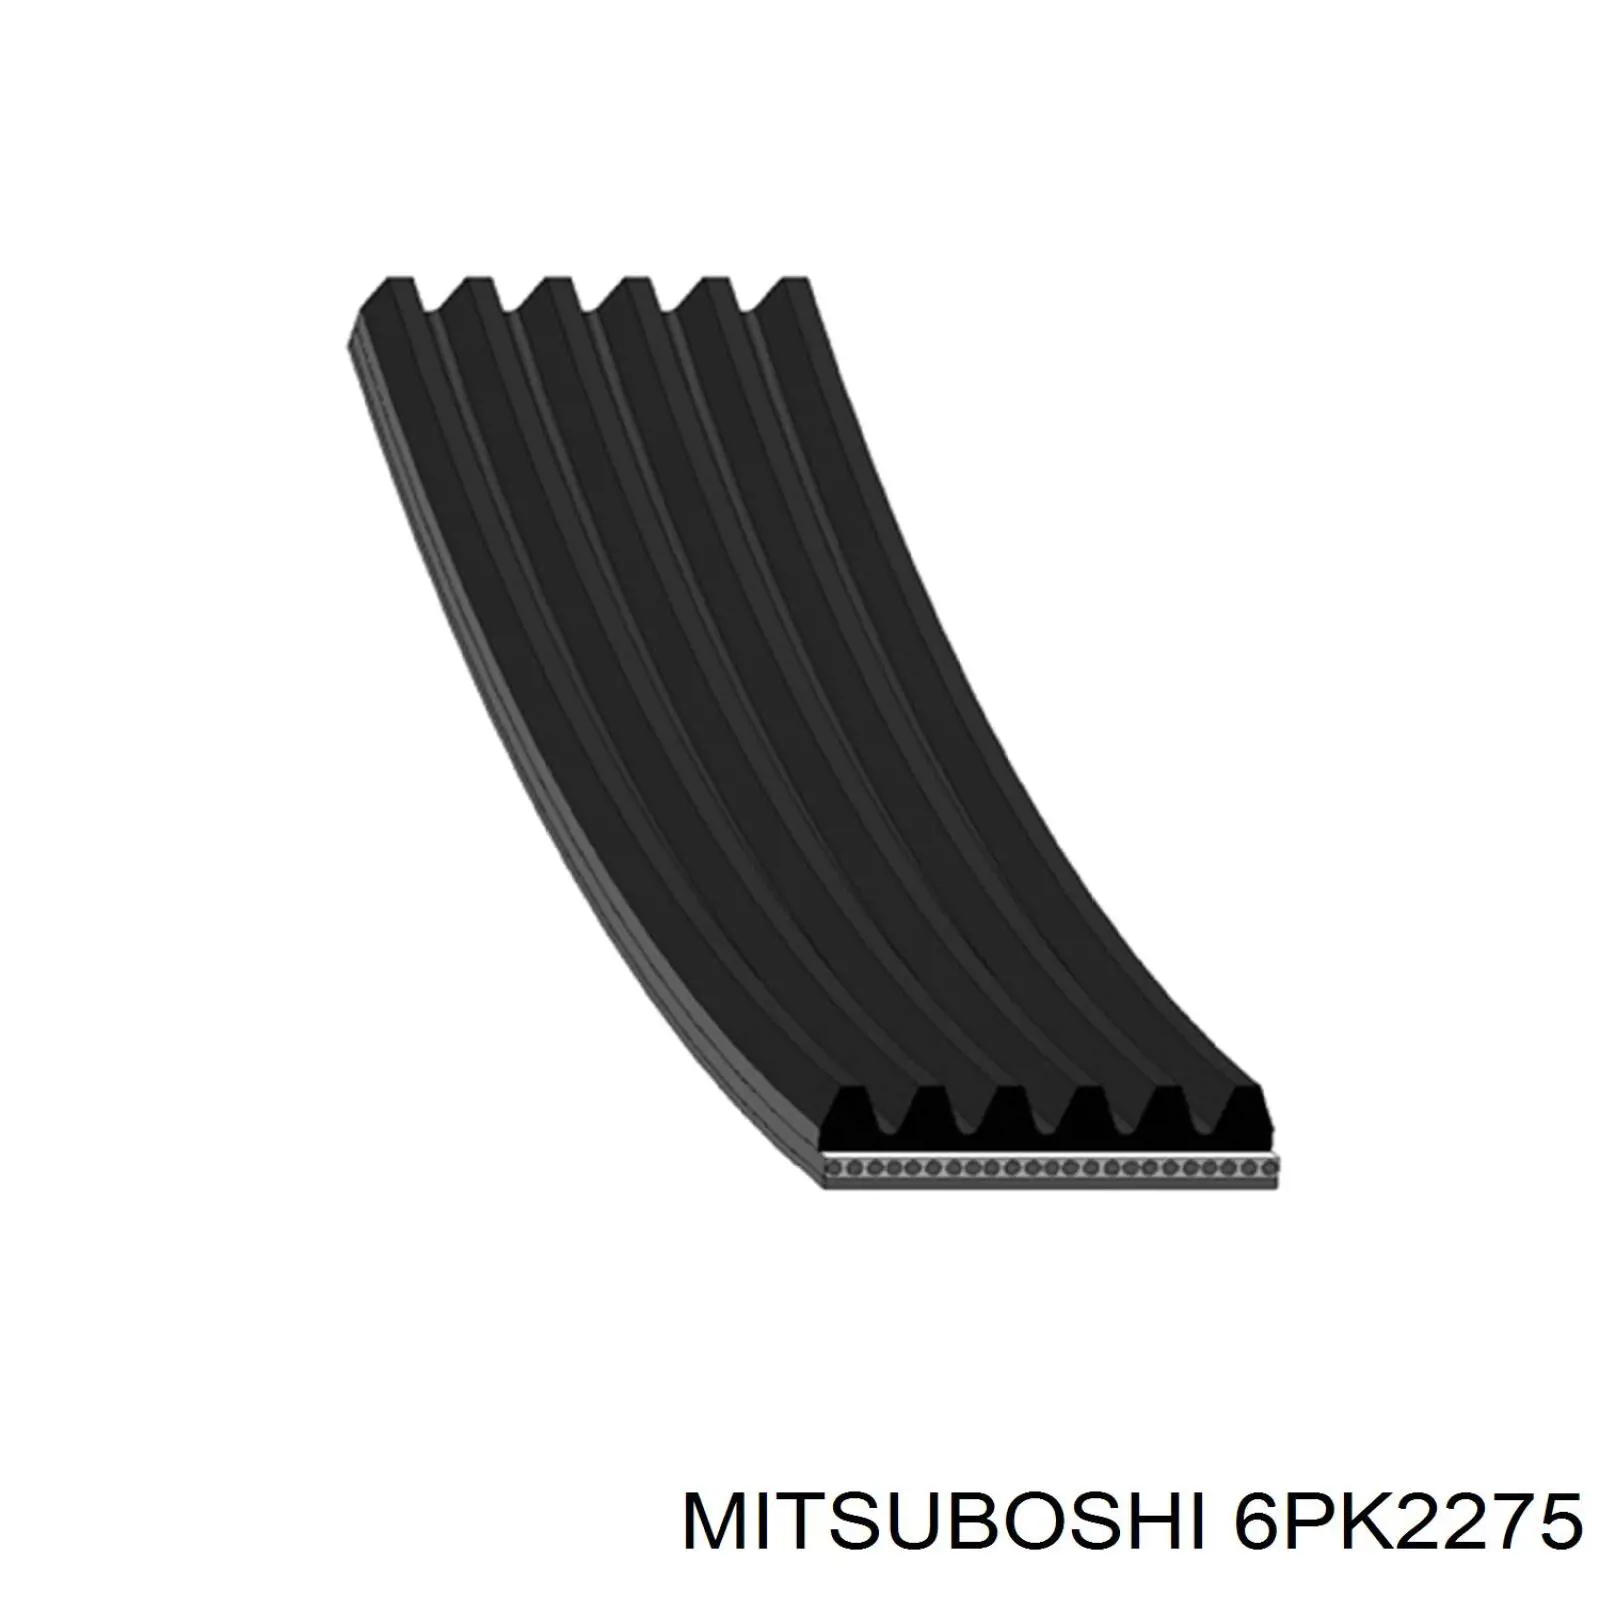 6PK2275 Mitsuboshi correa trapezoidal